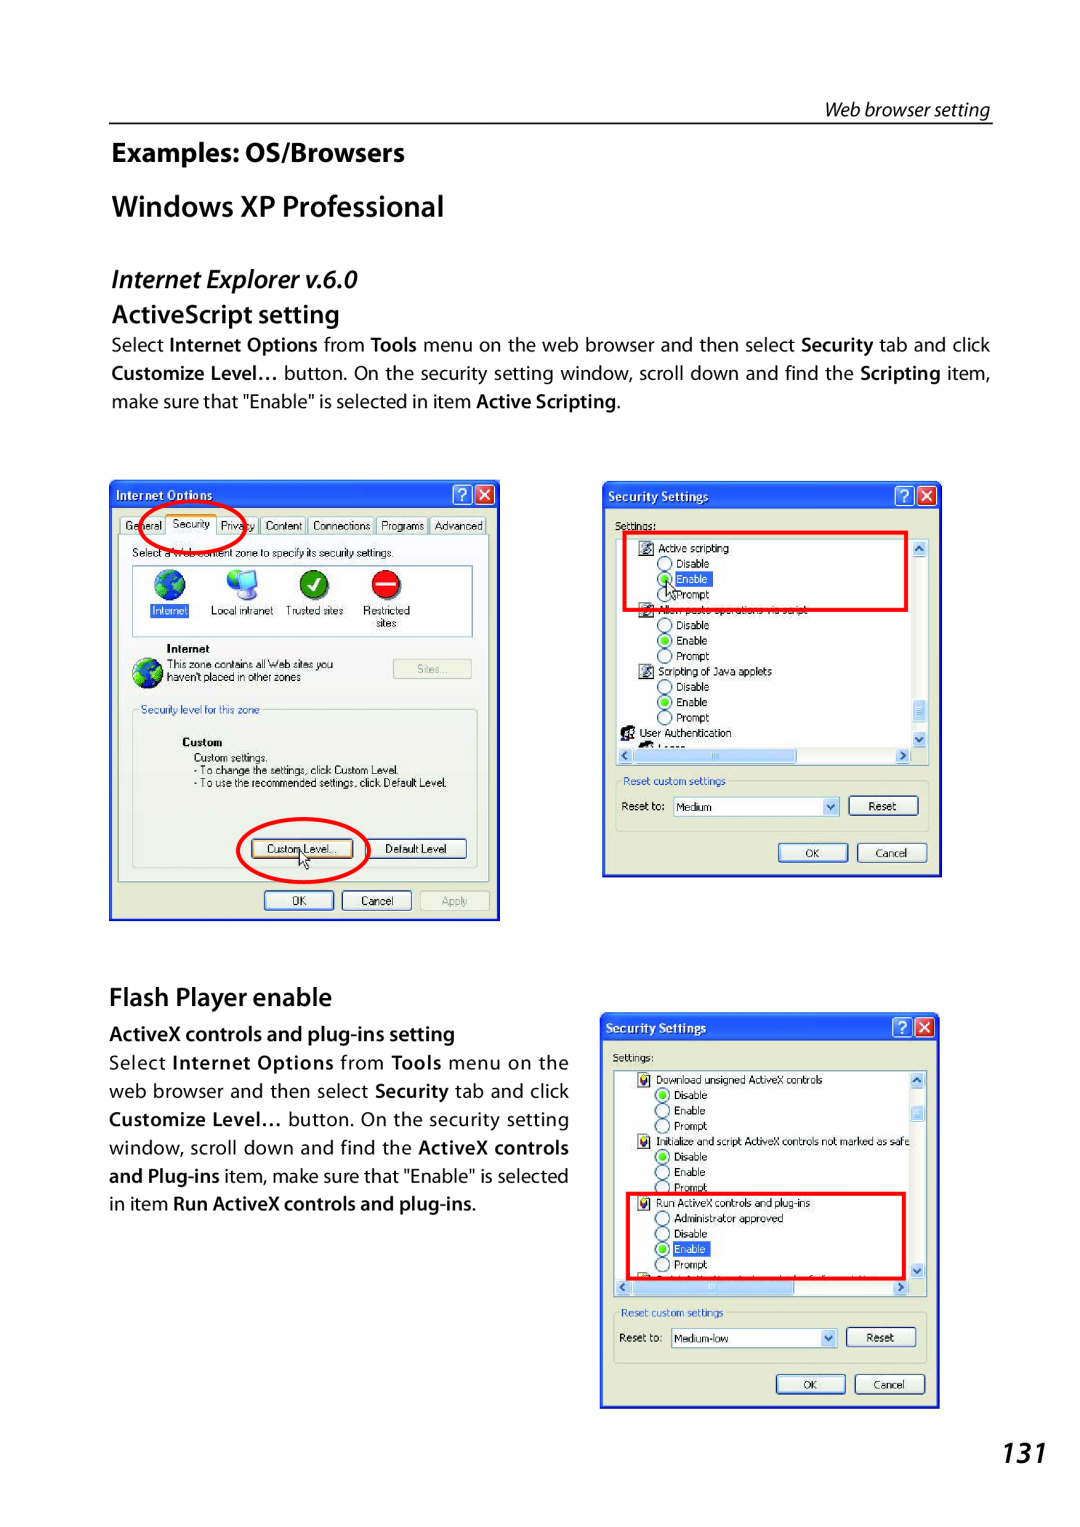 Sanyo QXXAVC922---P, SO-WIN-KF3AC Windows XP Professional, Examples: OS/Browsers, Internet Explorer, ActiveScript setting 